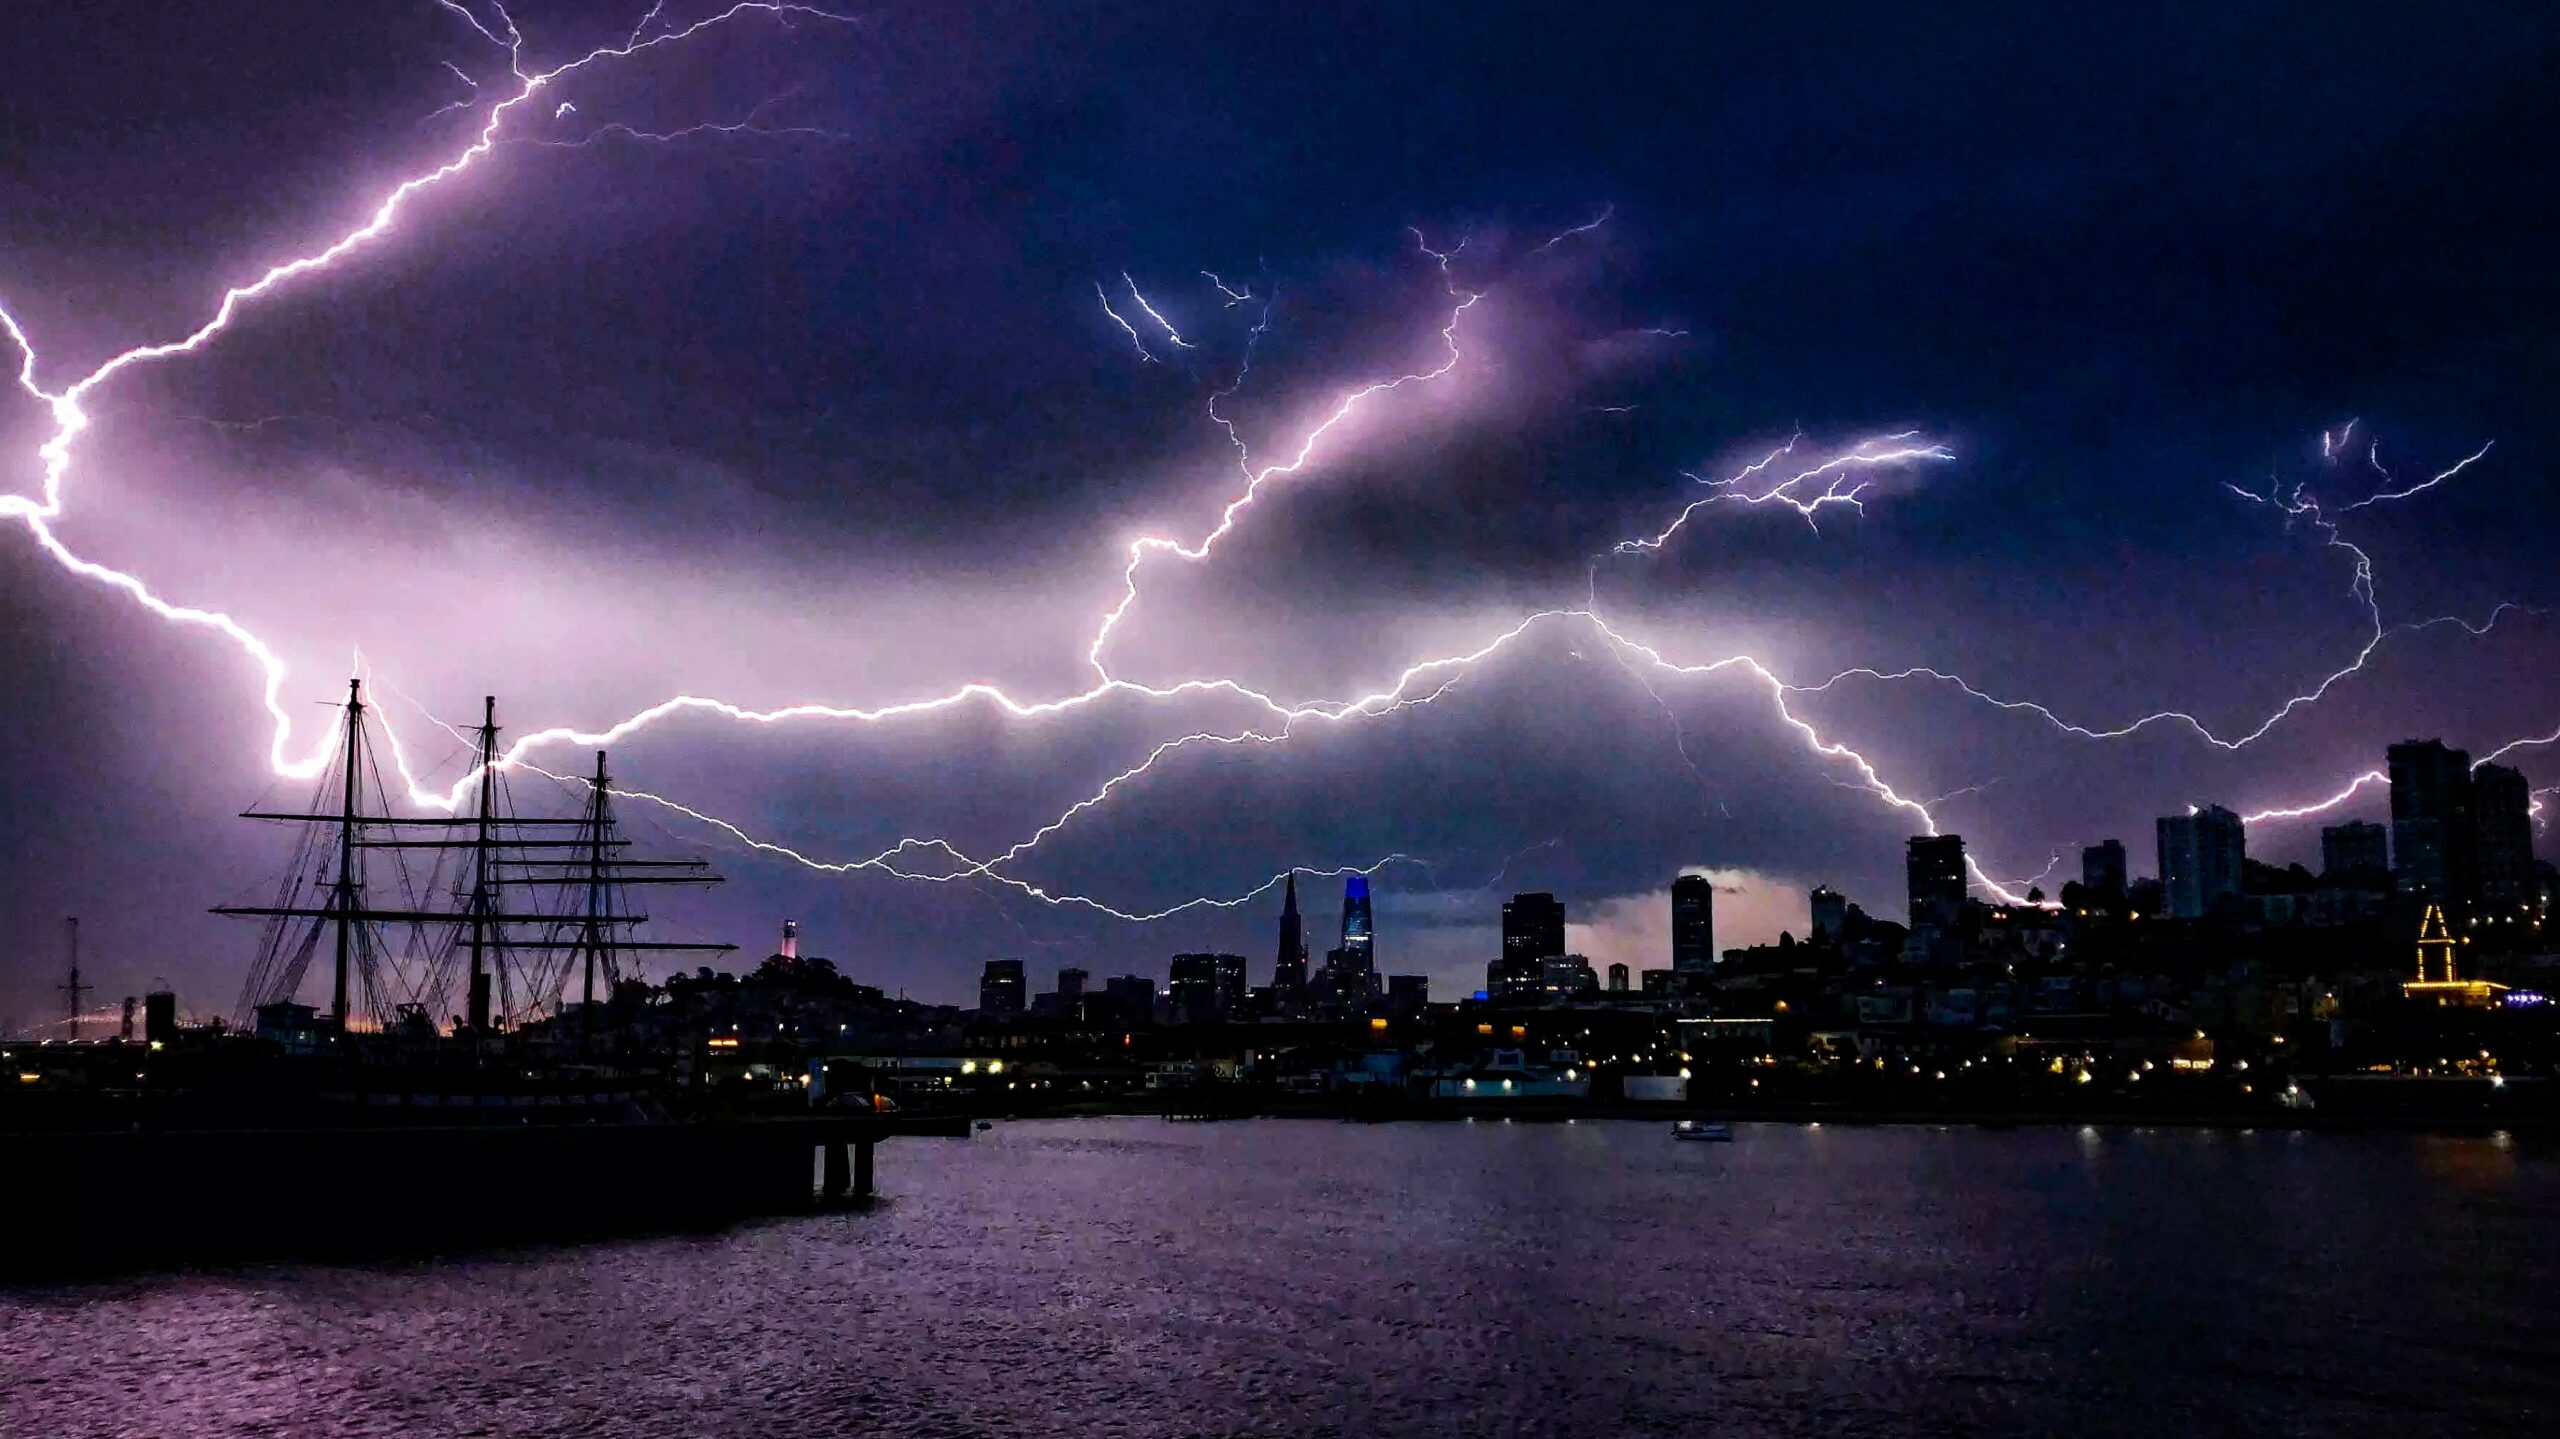 Amazing Photos of The Bay's Epic Lightning Storm
